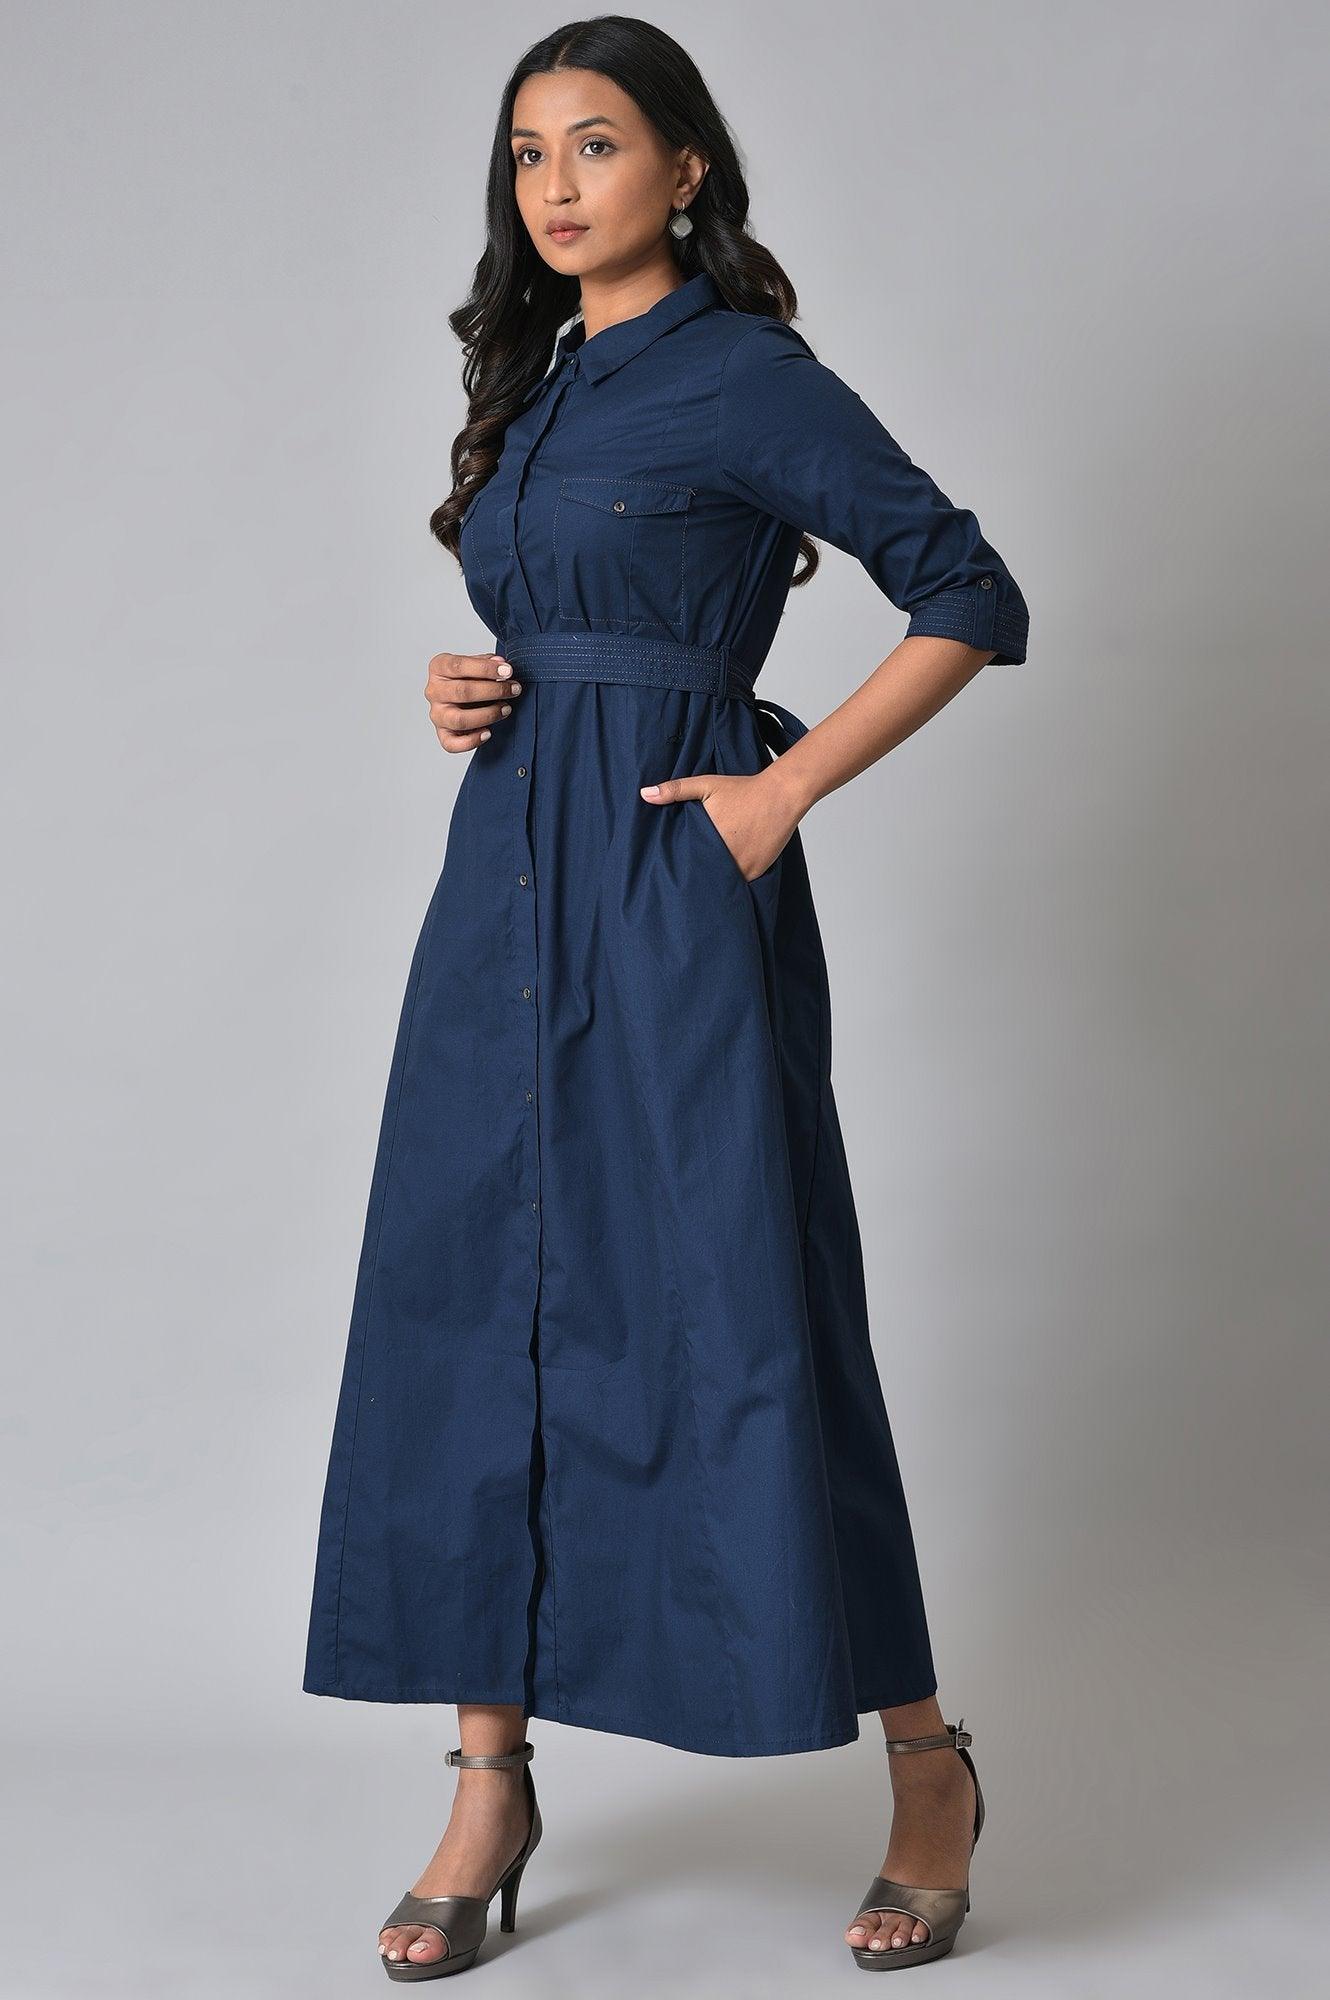 Plus Size Navy Blue Long Shirt Dress With Belt - wforwoman